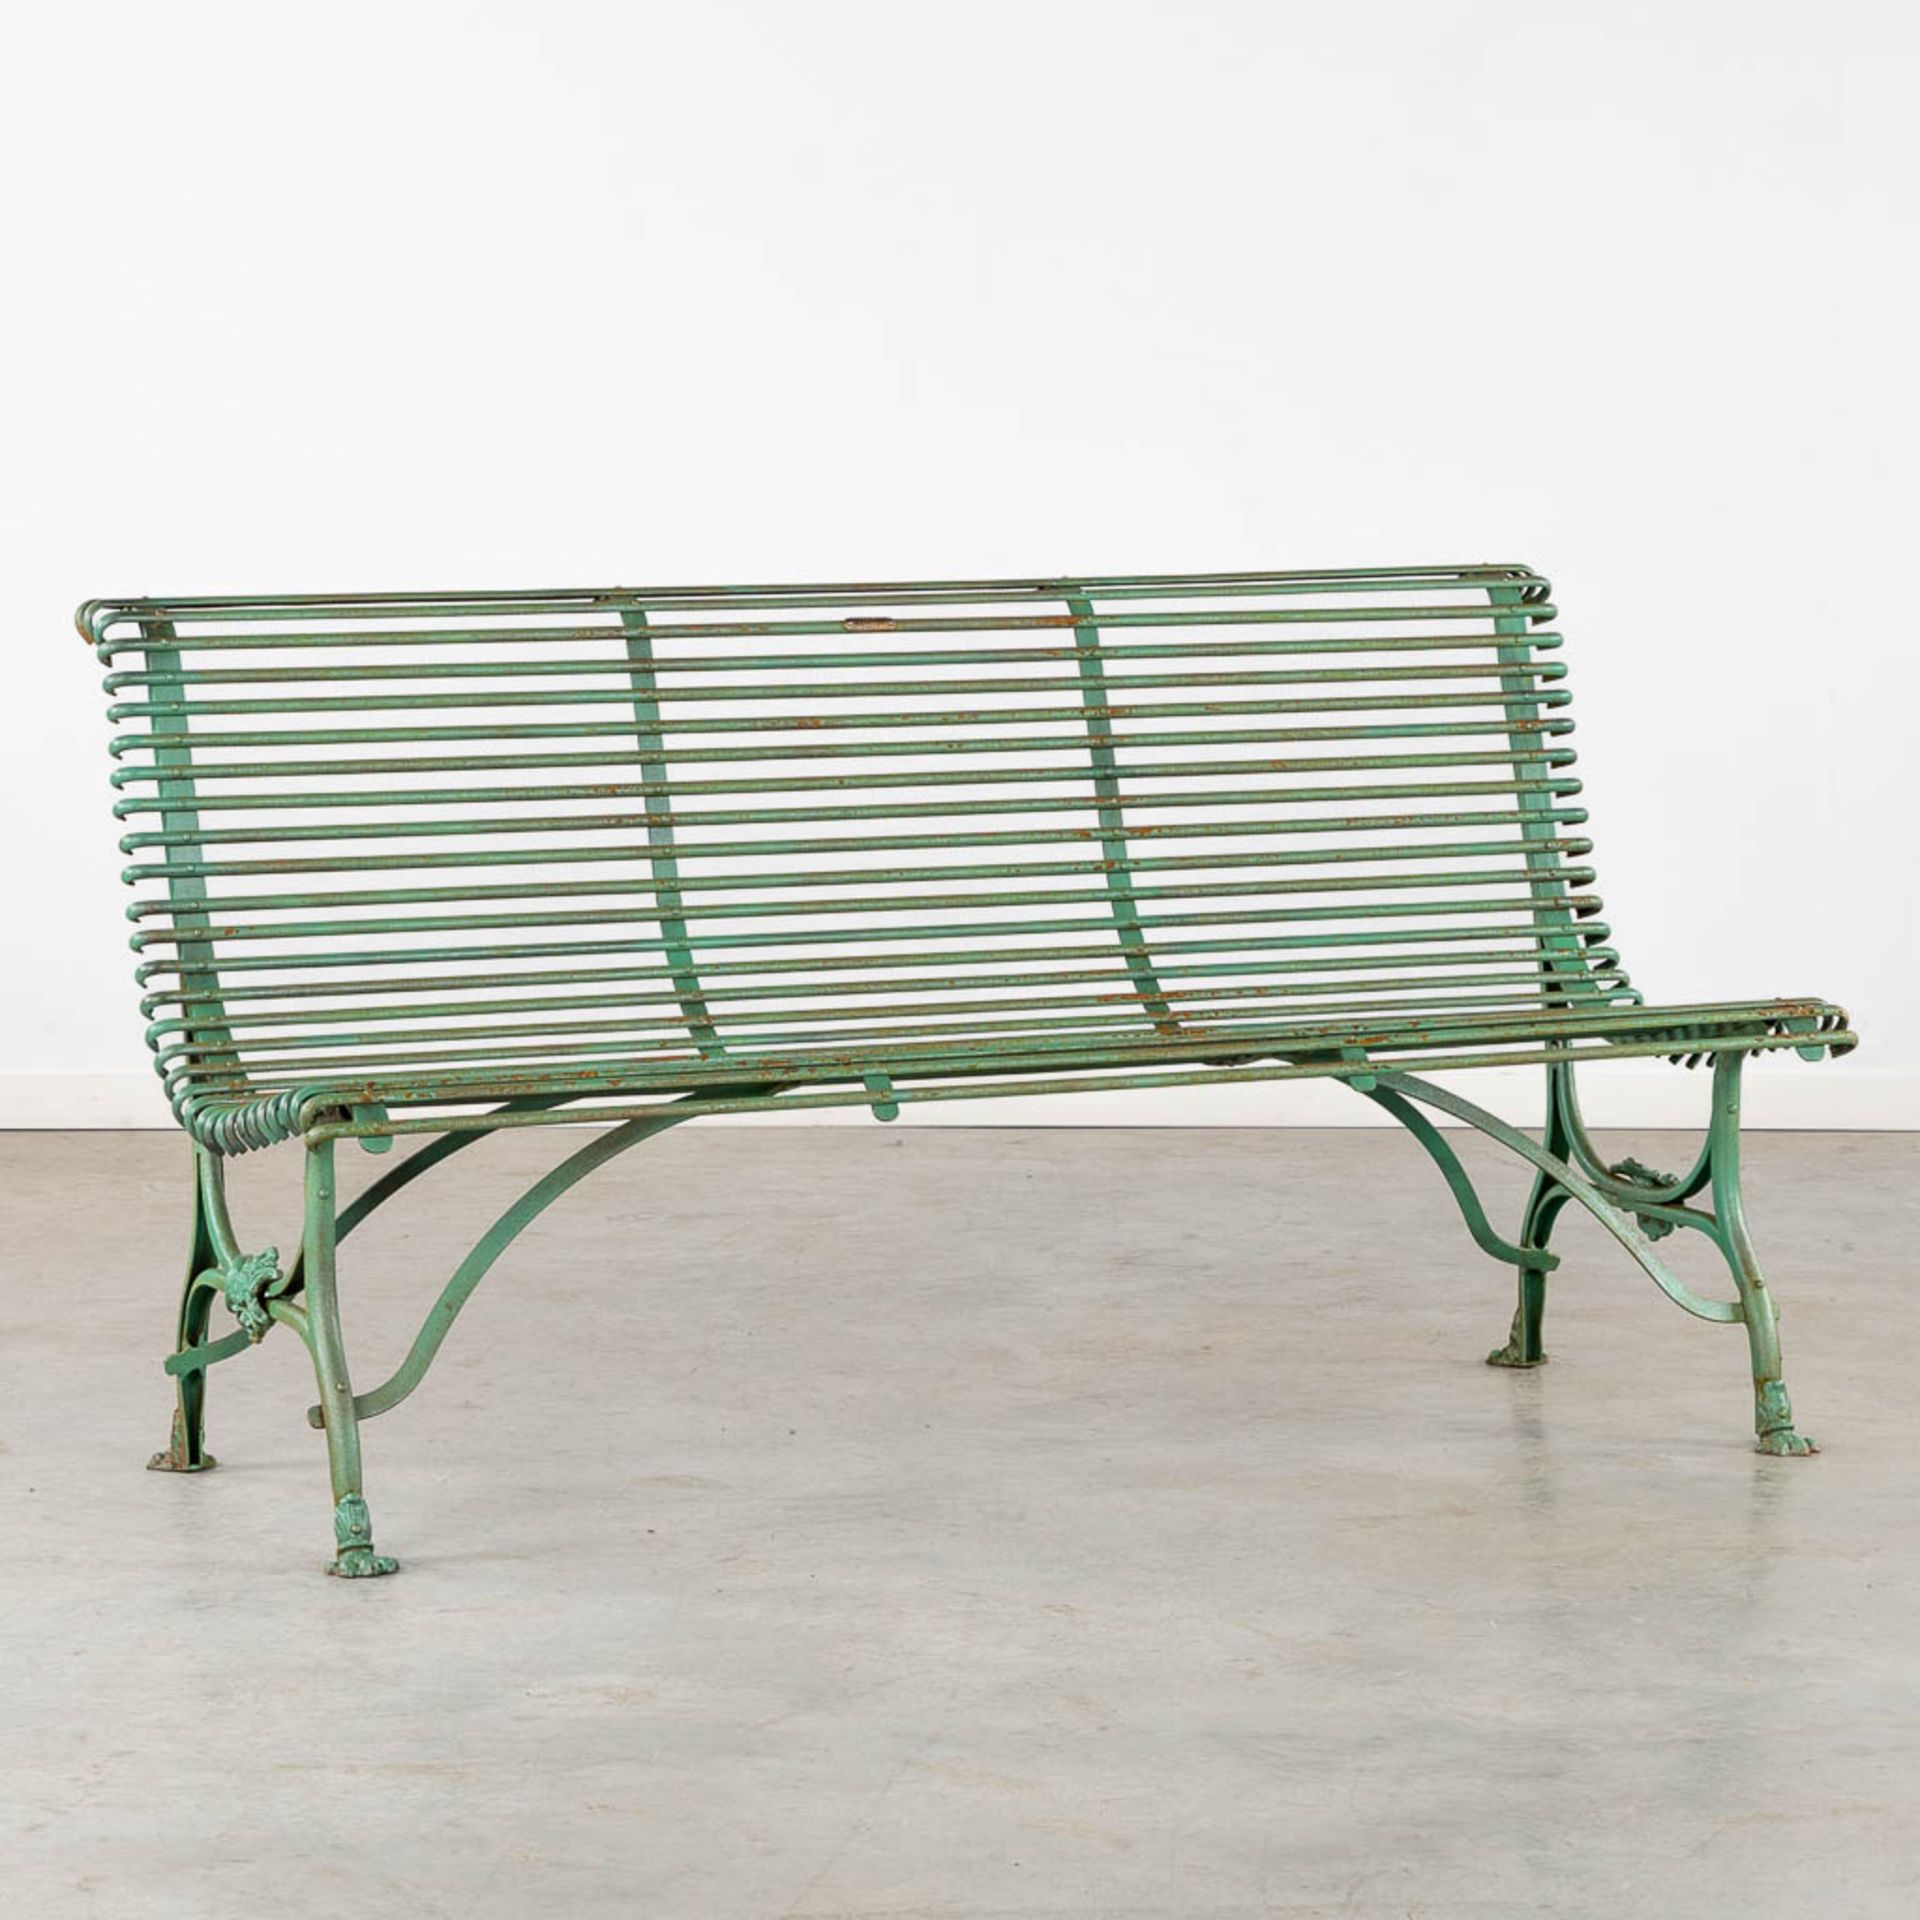 A green patinated garden bench, signed S. Sauveur, Arras. (L:66 x W:151 x H:80 cm)